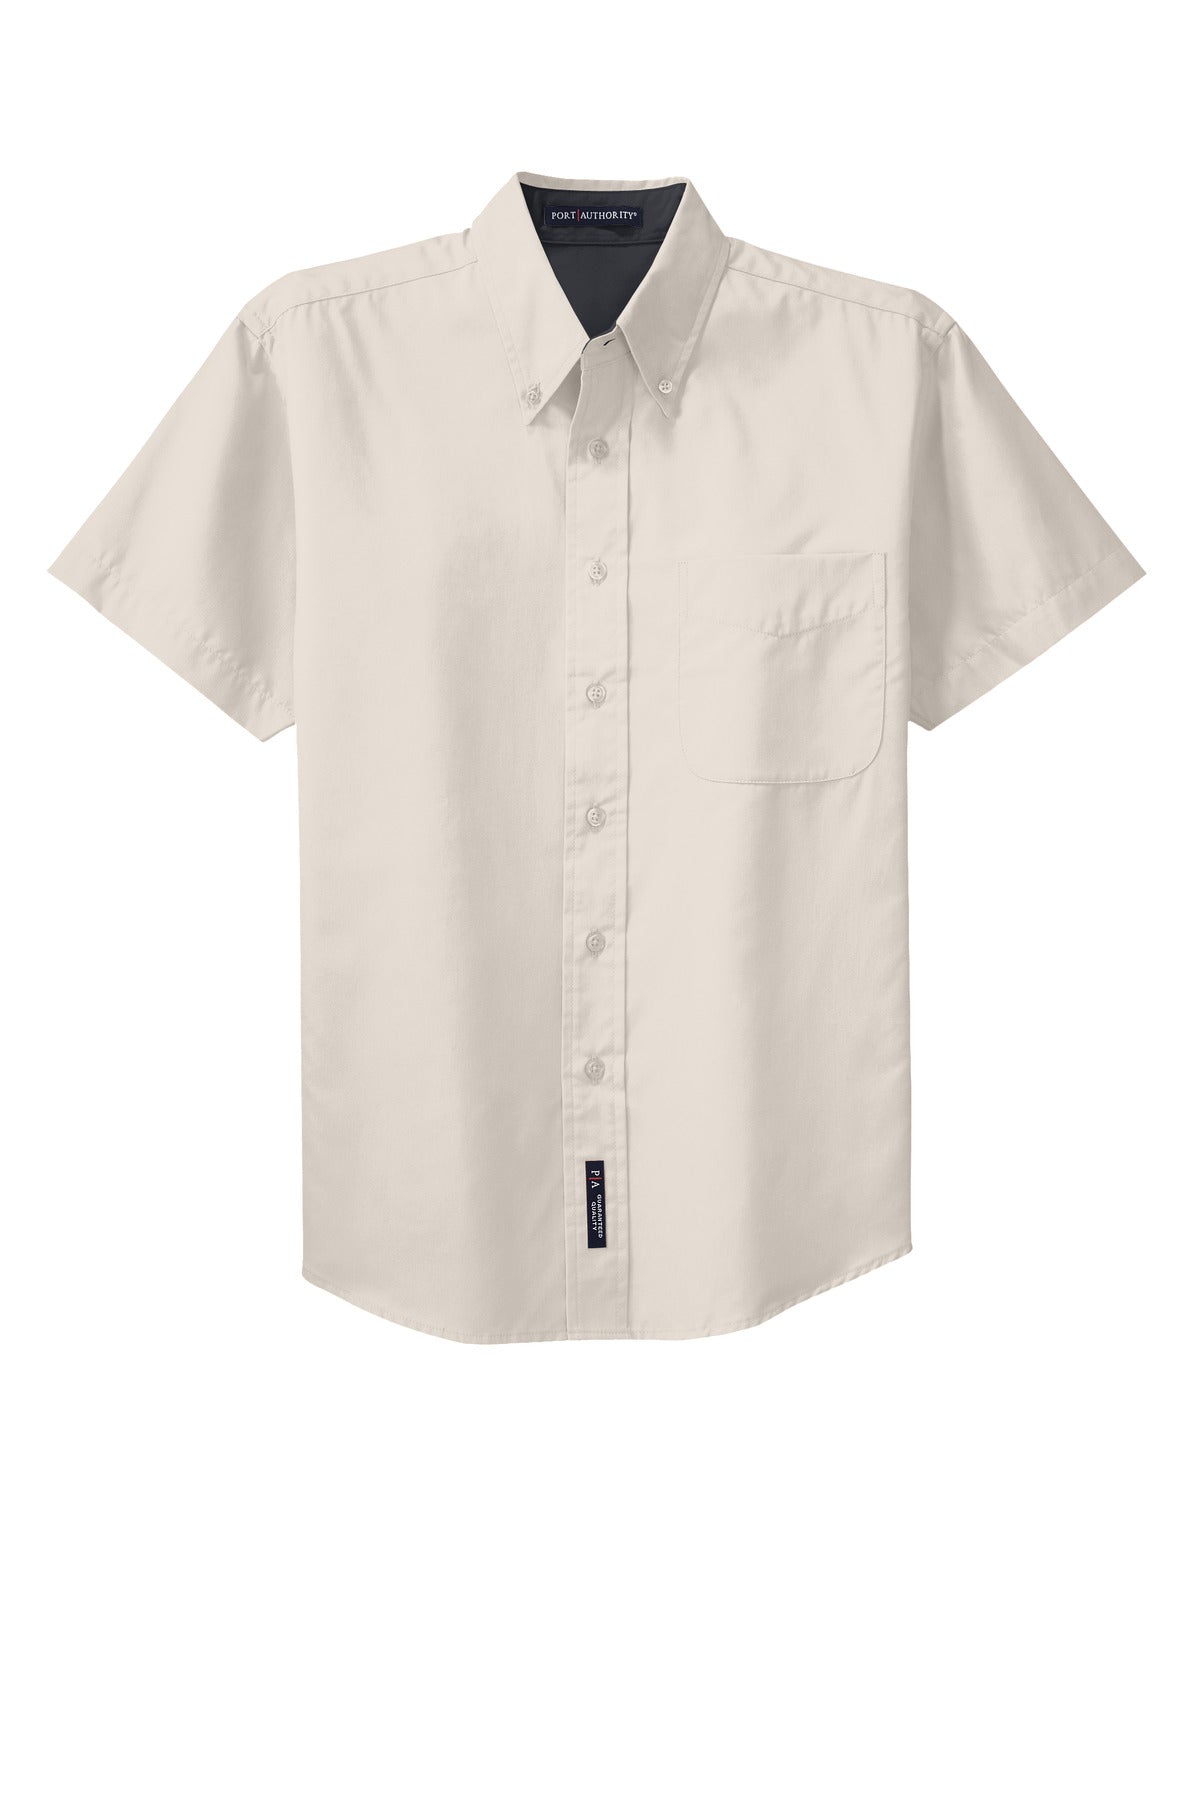 Port Authority Tall Short Sleeve Easy Care Shirt. TLS508